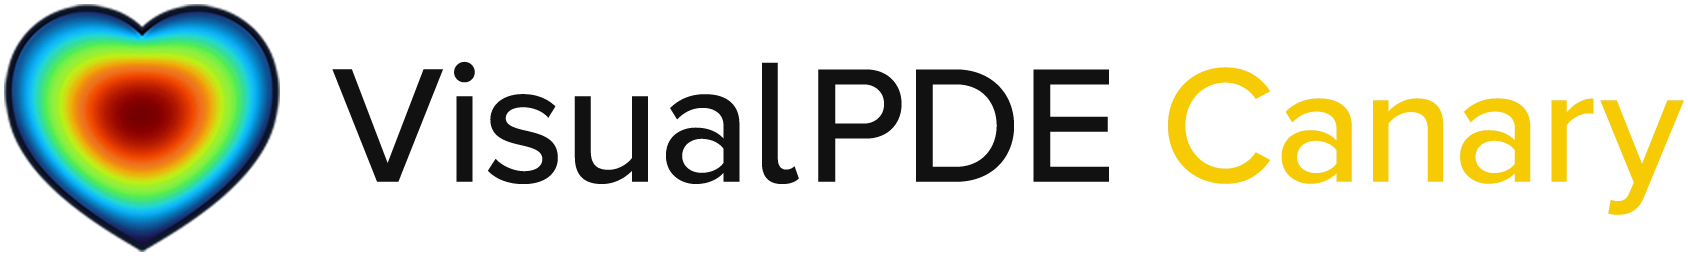 VisualPDE and a heart-shaped logo